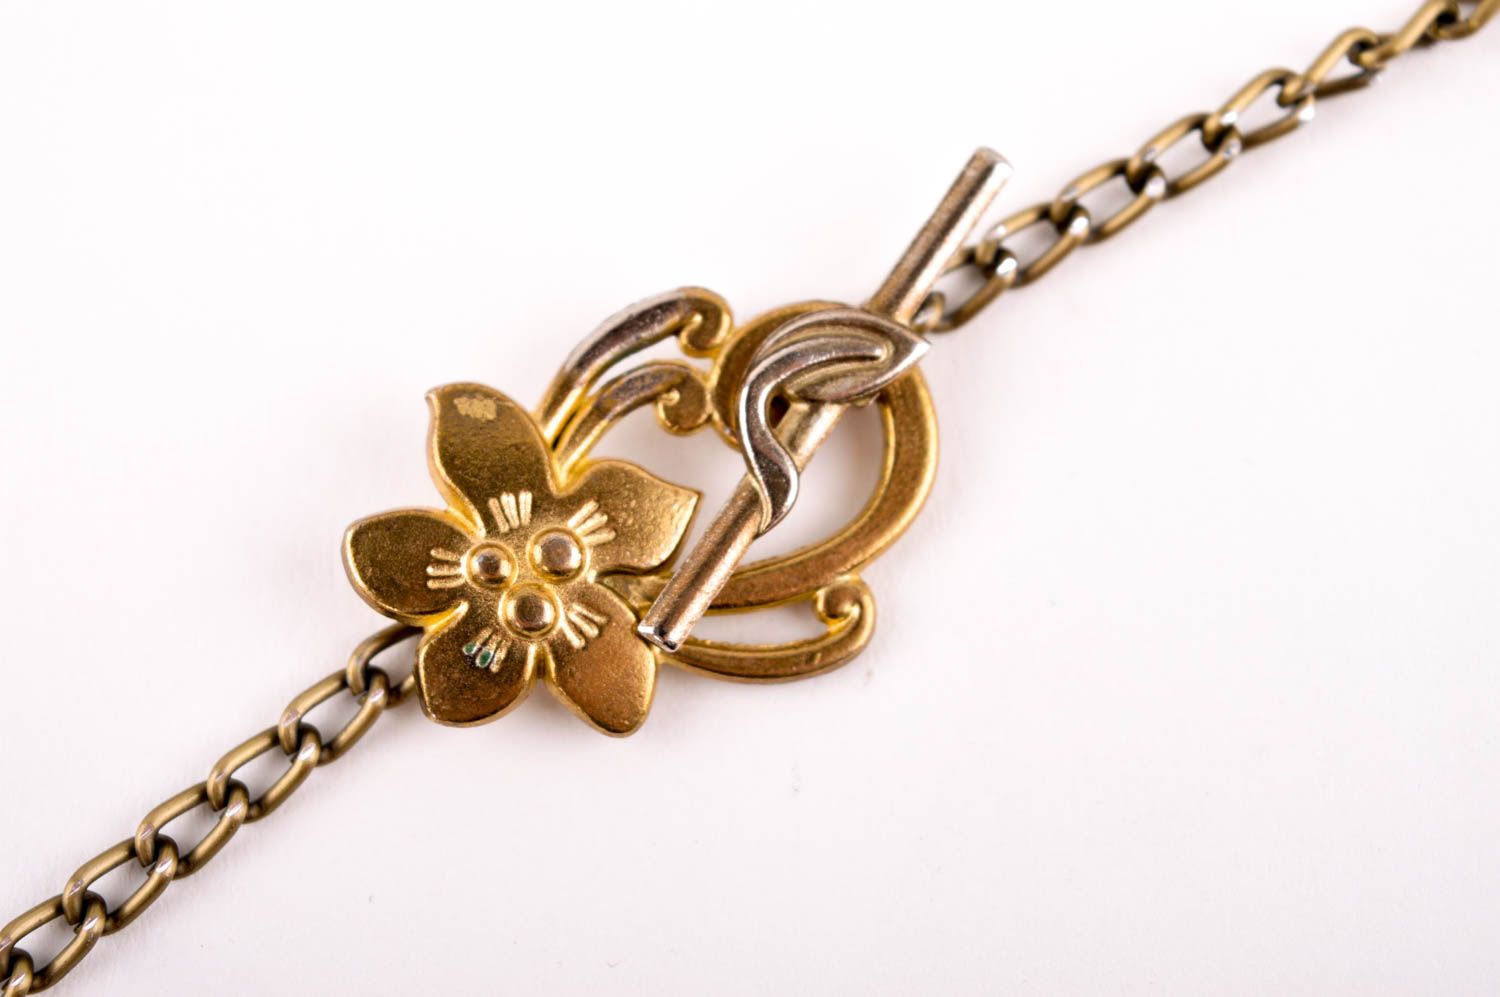 Handmade necklace designer ncklace with stone designer jewelry unusual accessory photo 4